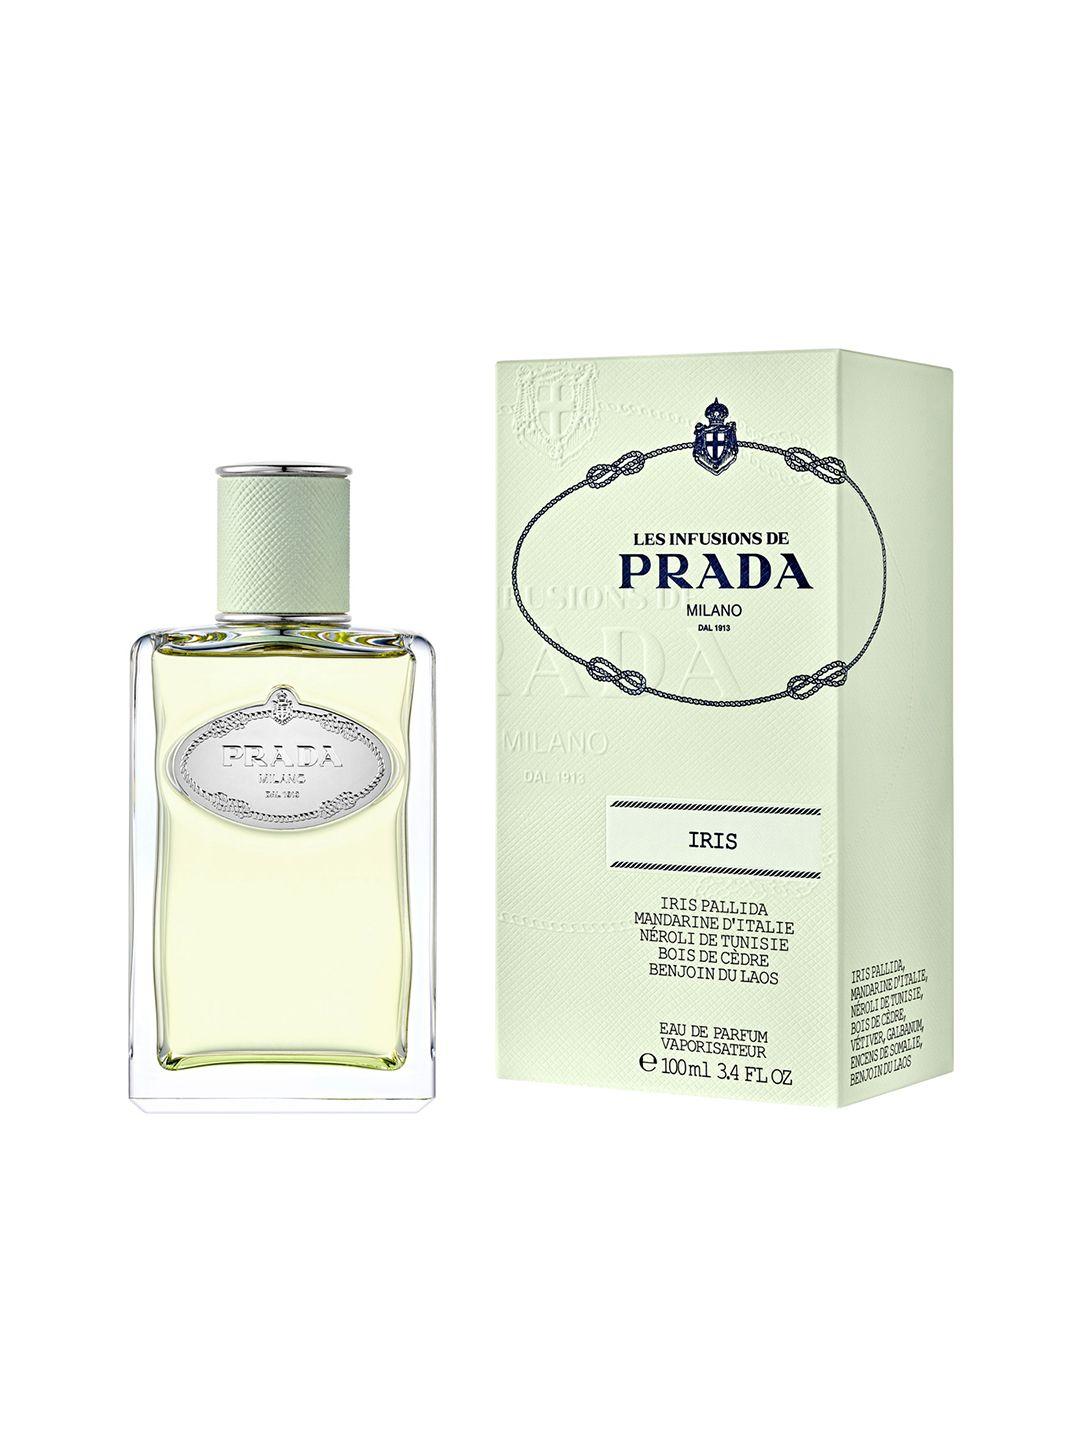 prada women infusion iris eau de parfum - 100ml